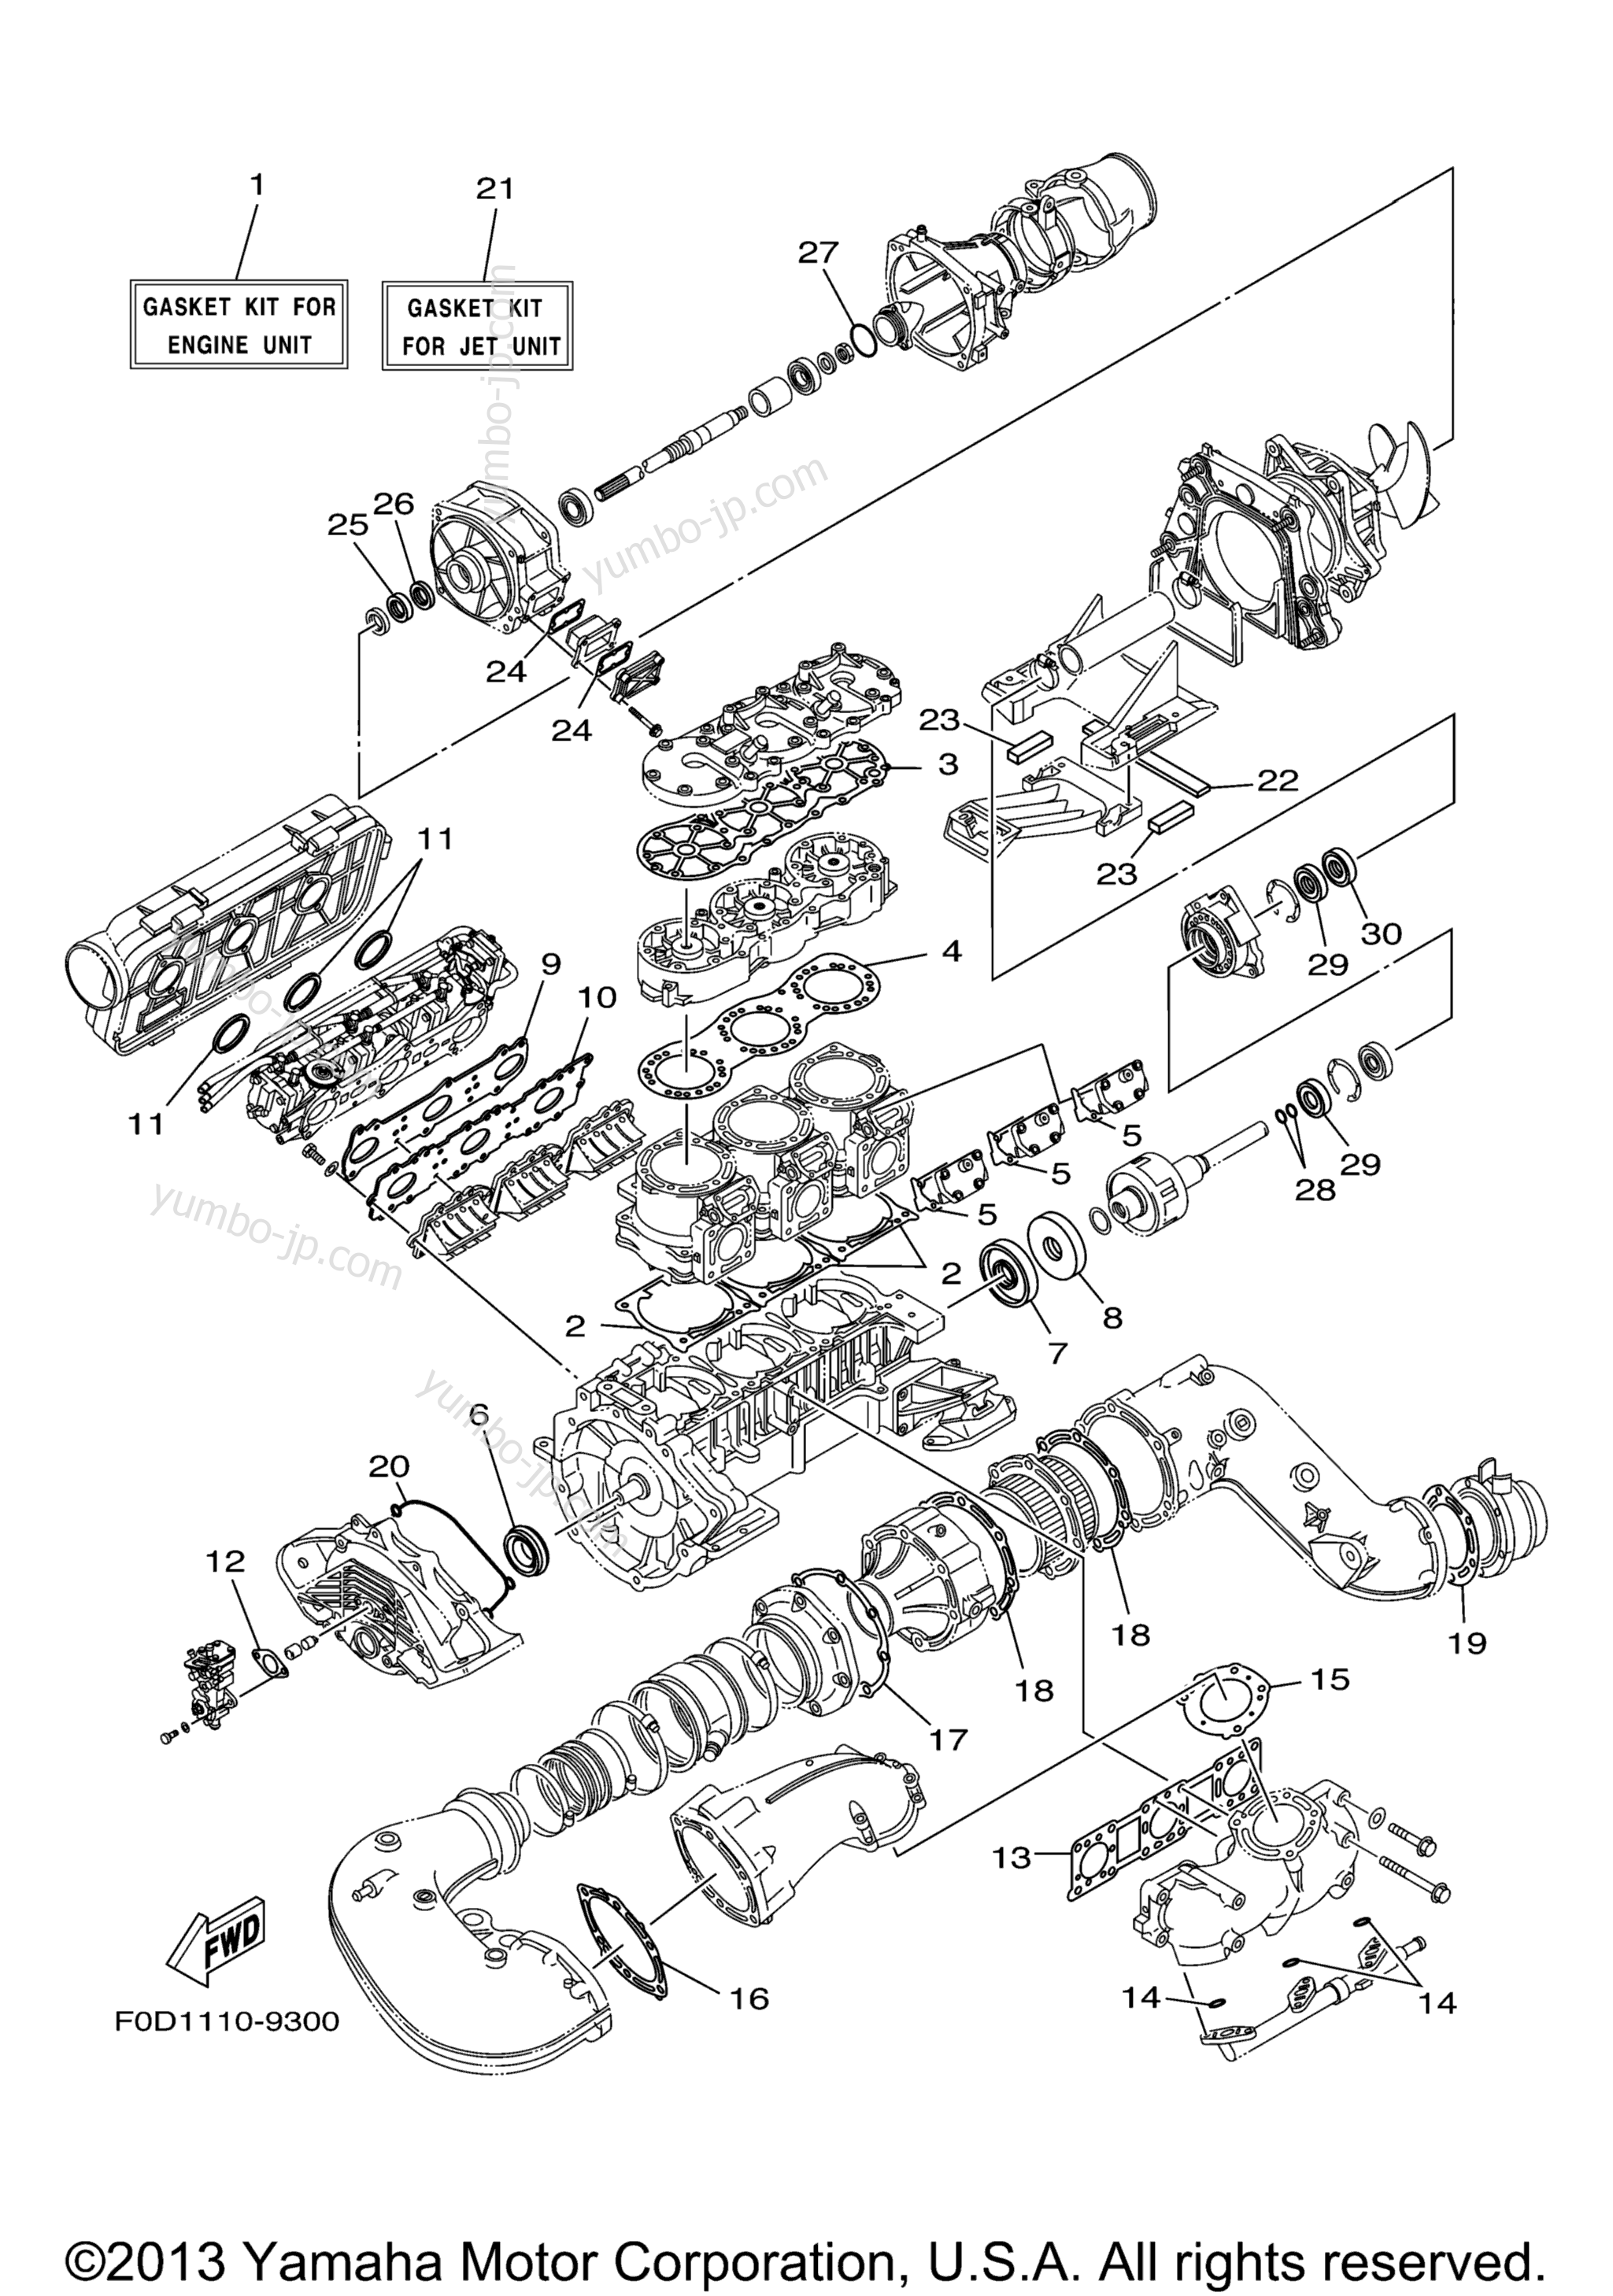 Repair Kit 1 для гидроциклов YAMAHA GP1200 (GP1200AY) 2000 г.